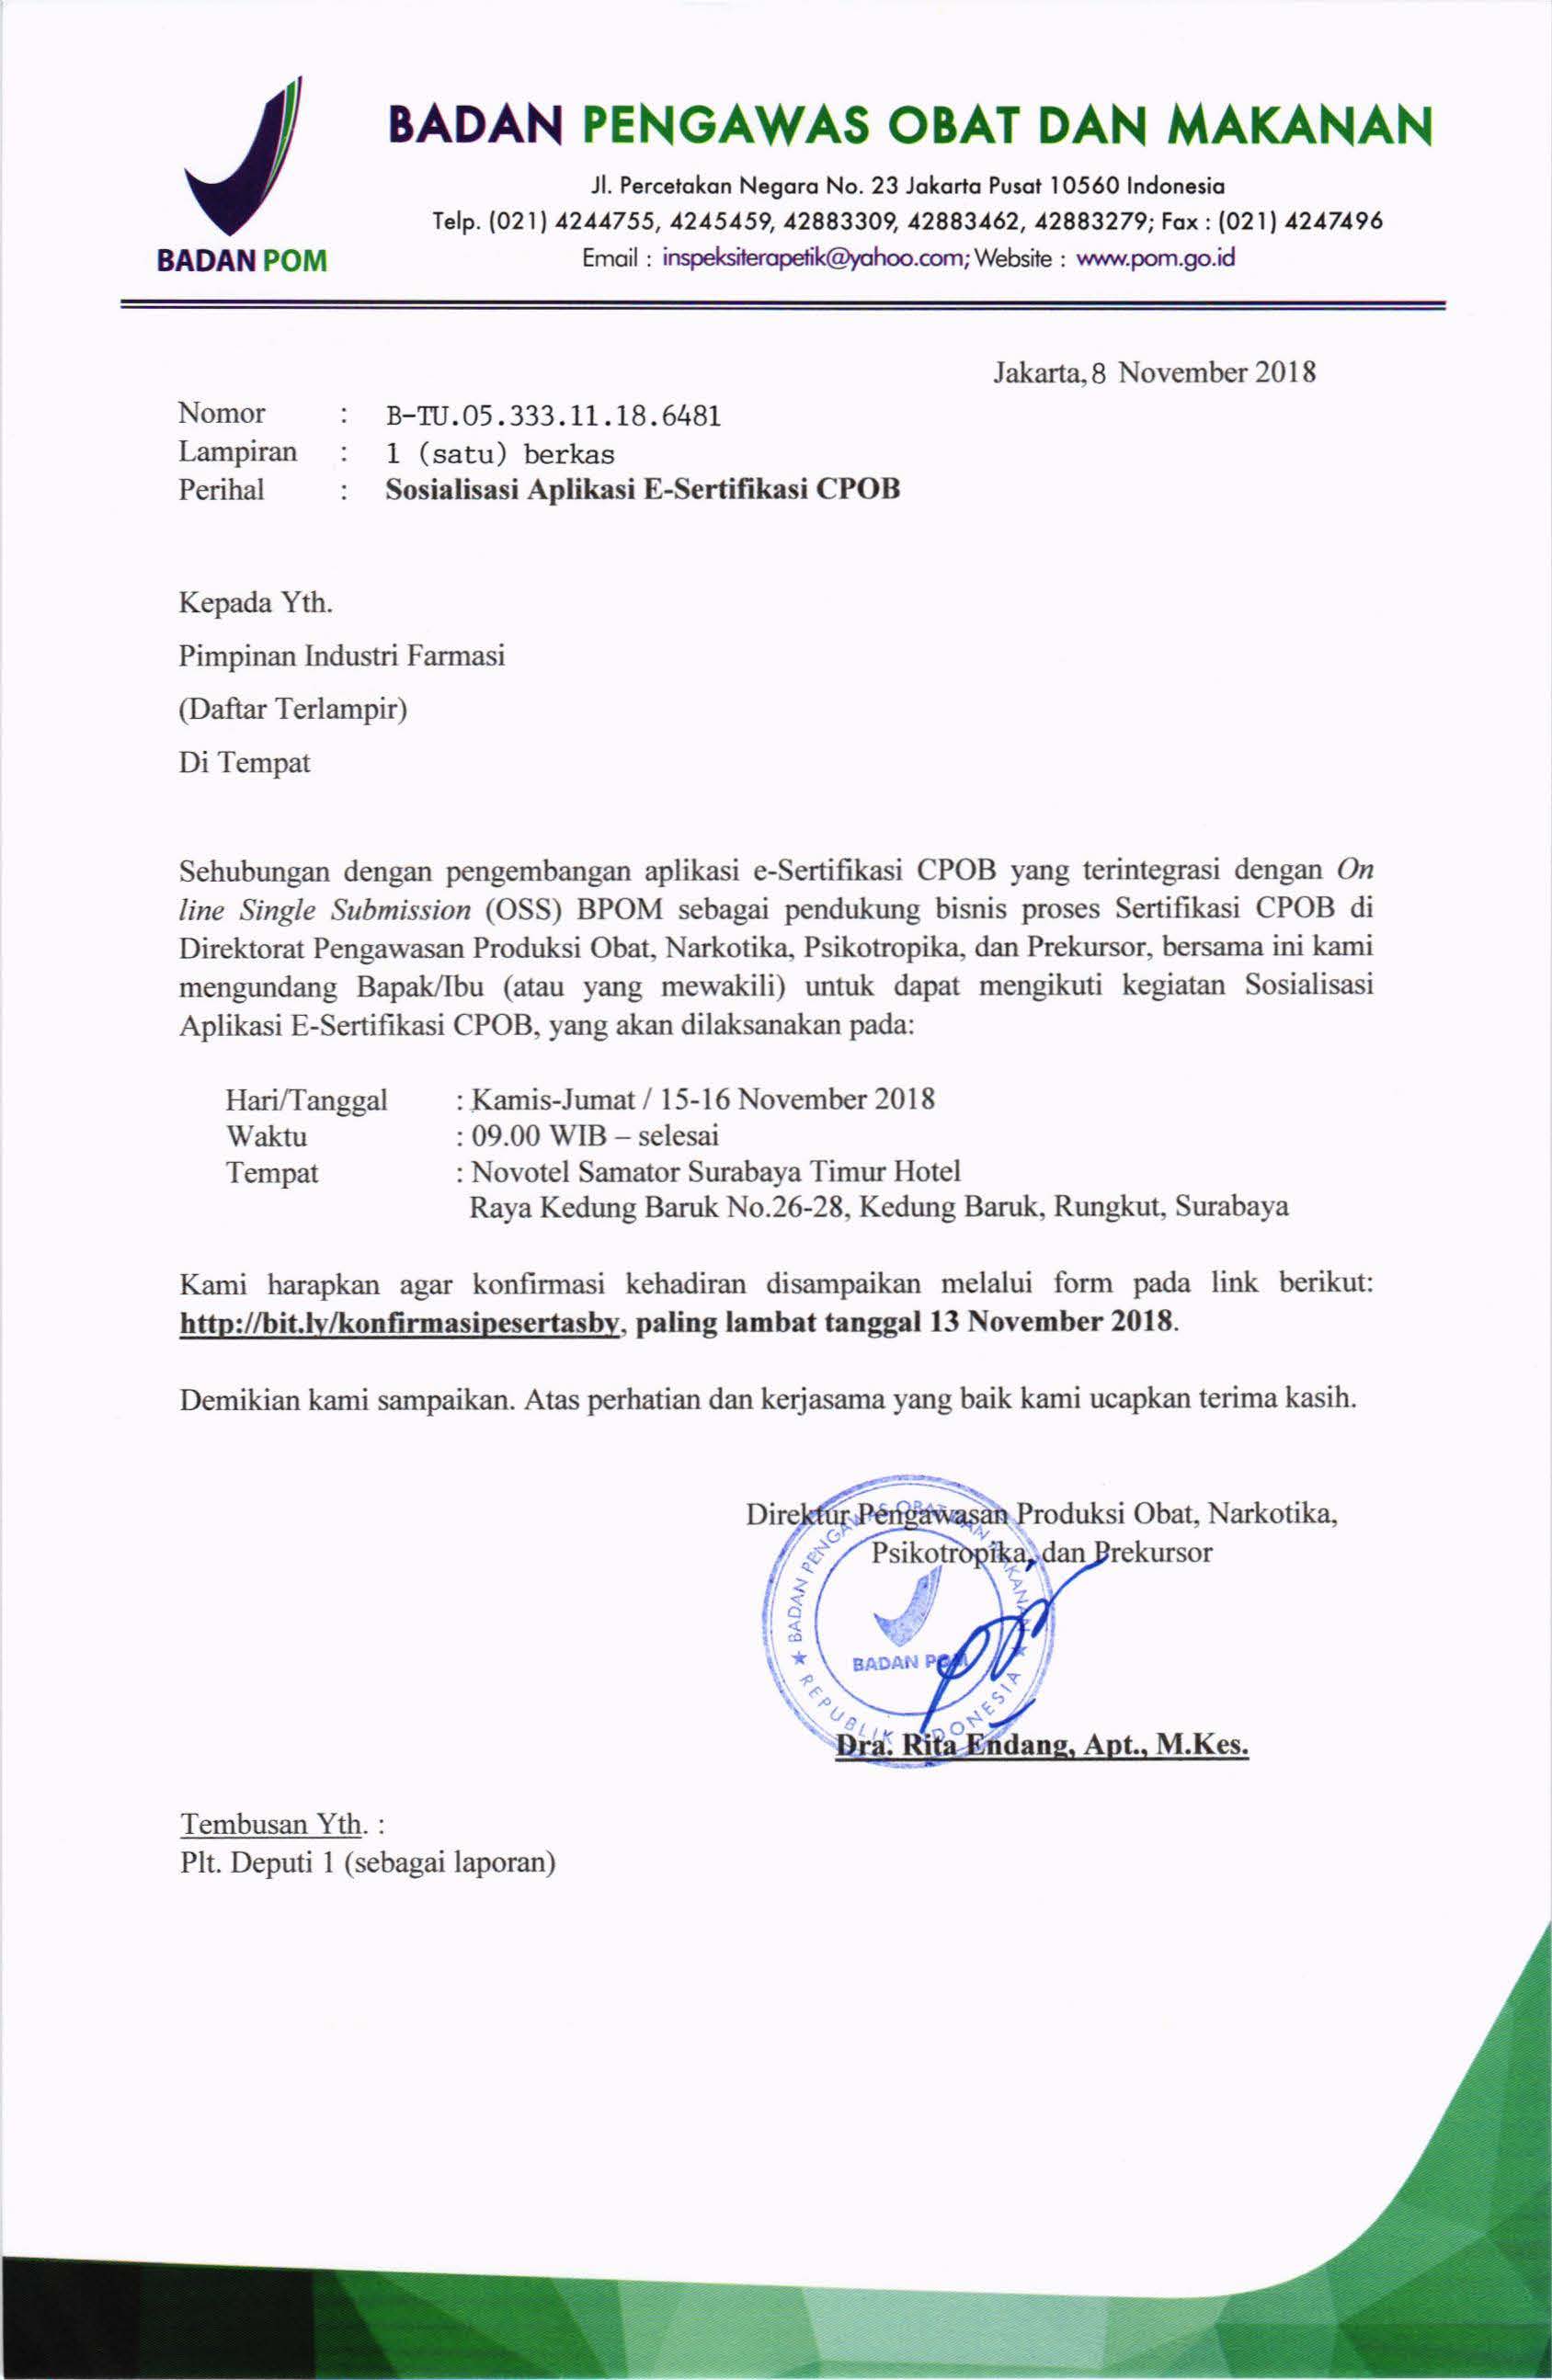 2018-11-8 Undangan Sosialisasi Aplikasi e-Sertifikasi CPOB di Surabaya (IF Jatim )_Page_1